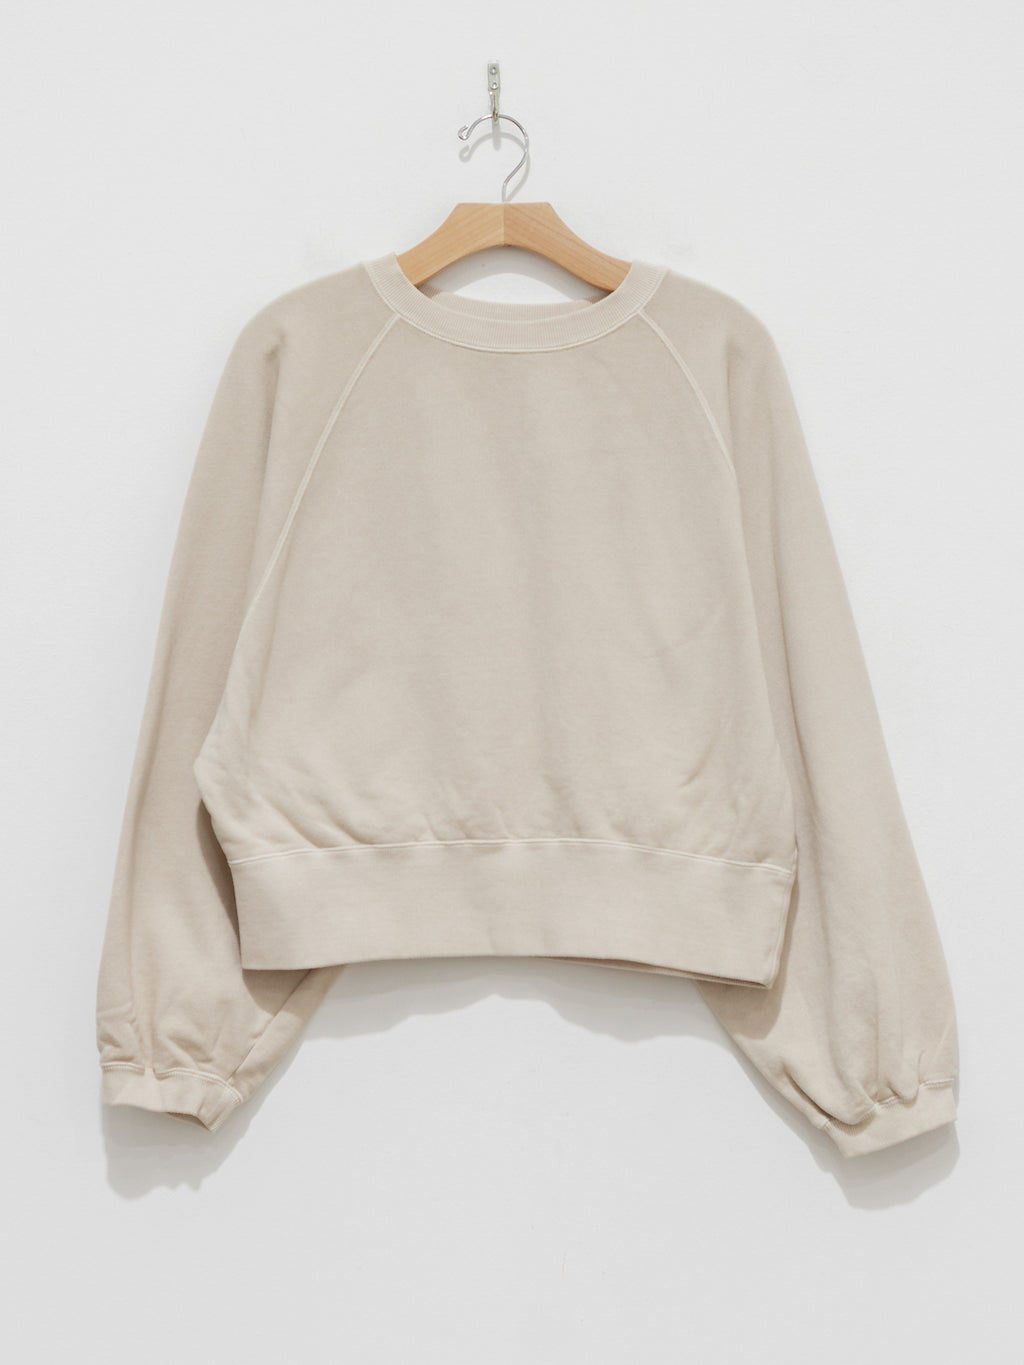 Namu Shop - ICHI Sweatshirt - Ivory